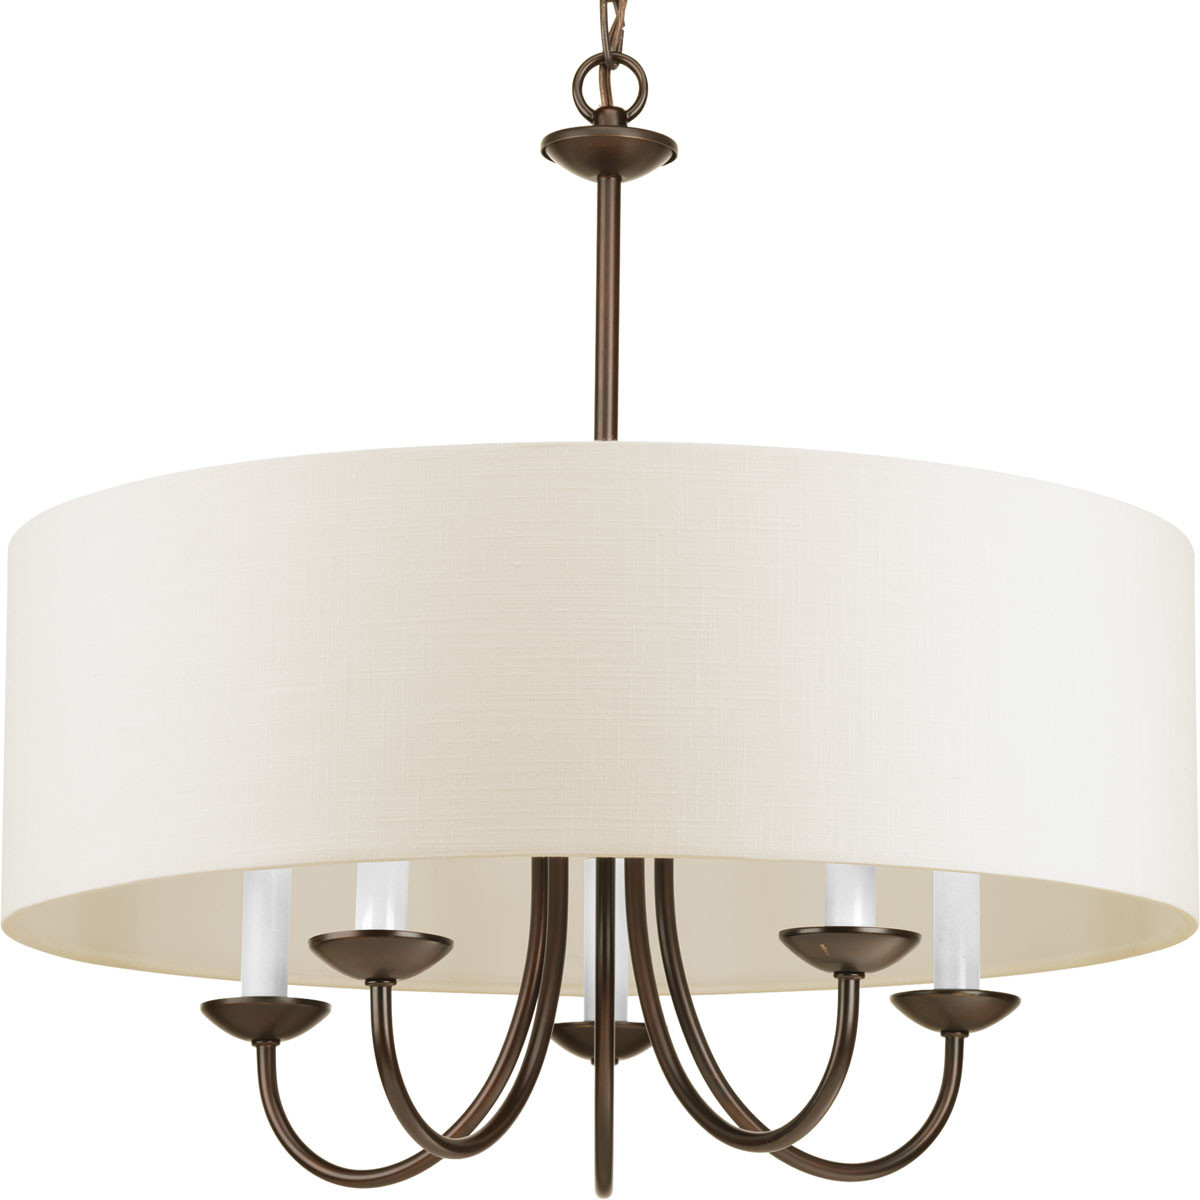 Classic, elegant lighting - drum shade chandelier pendants priced on a budget!